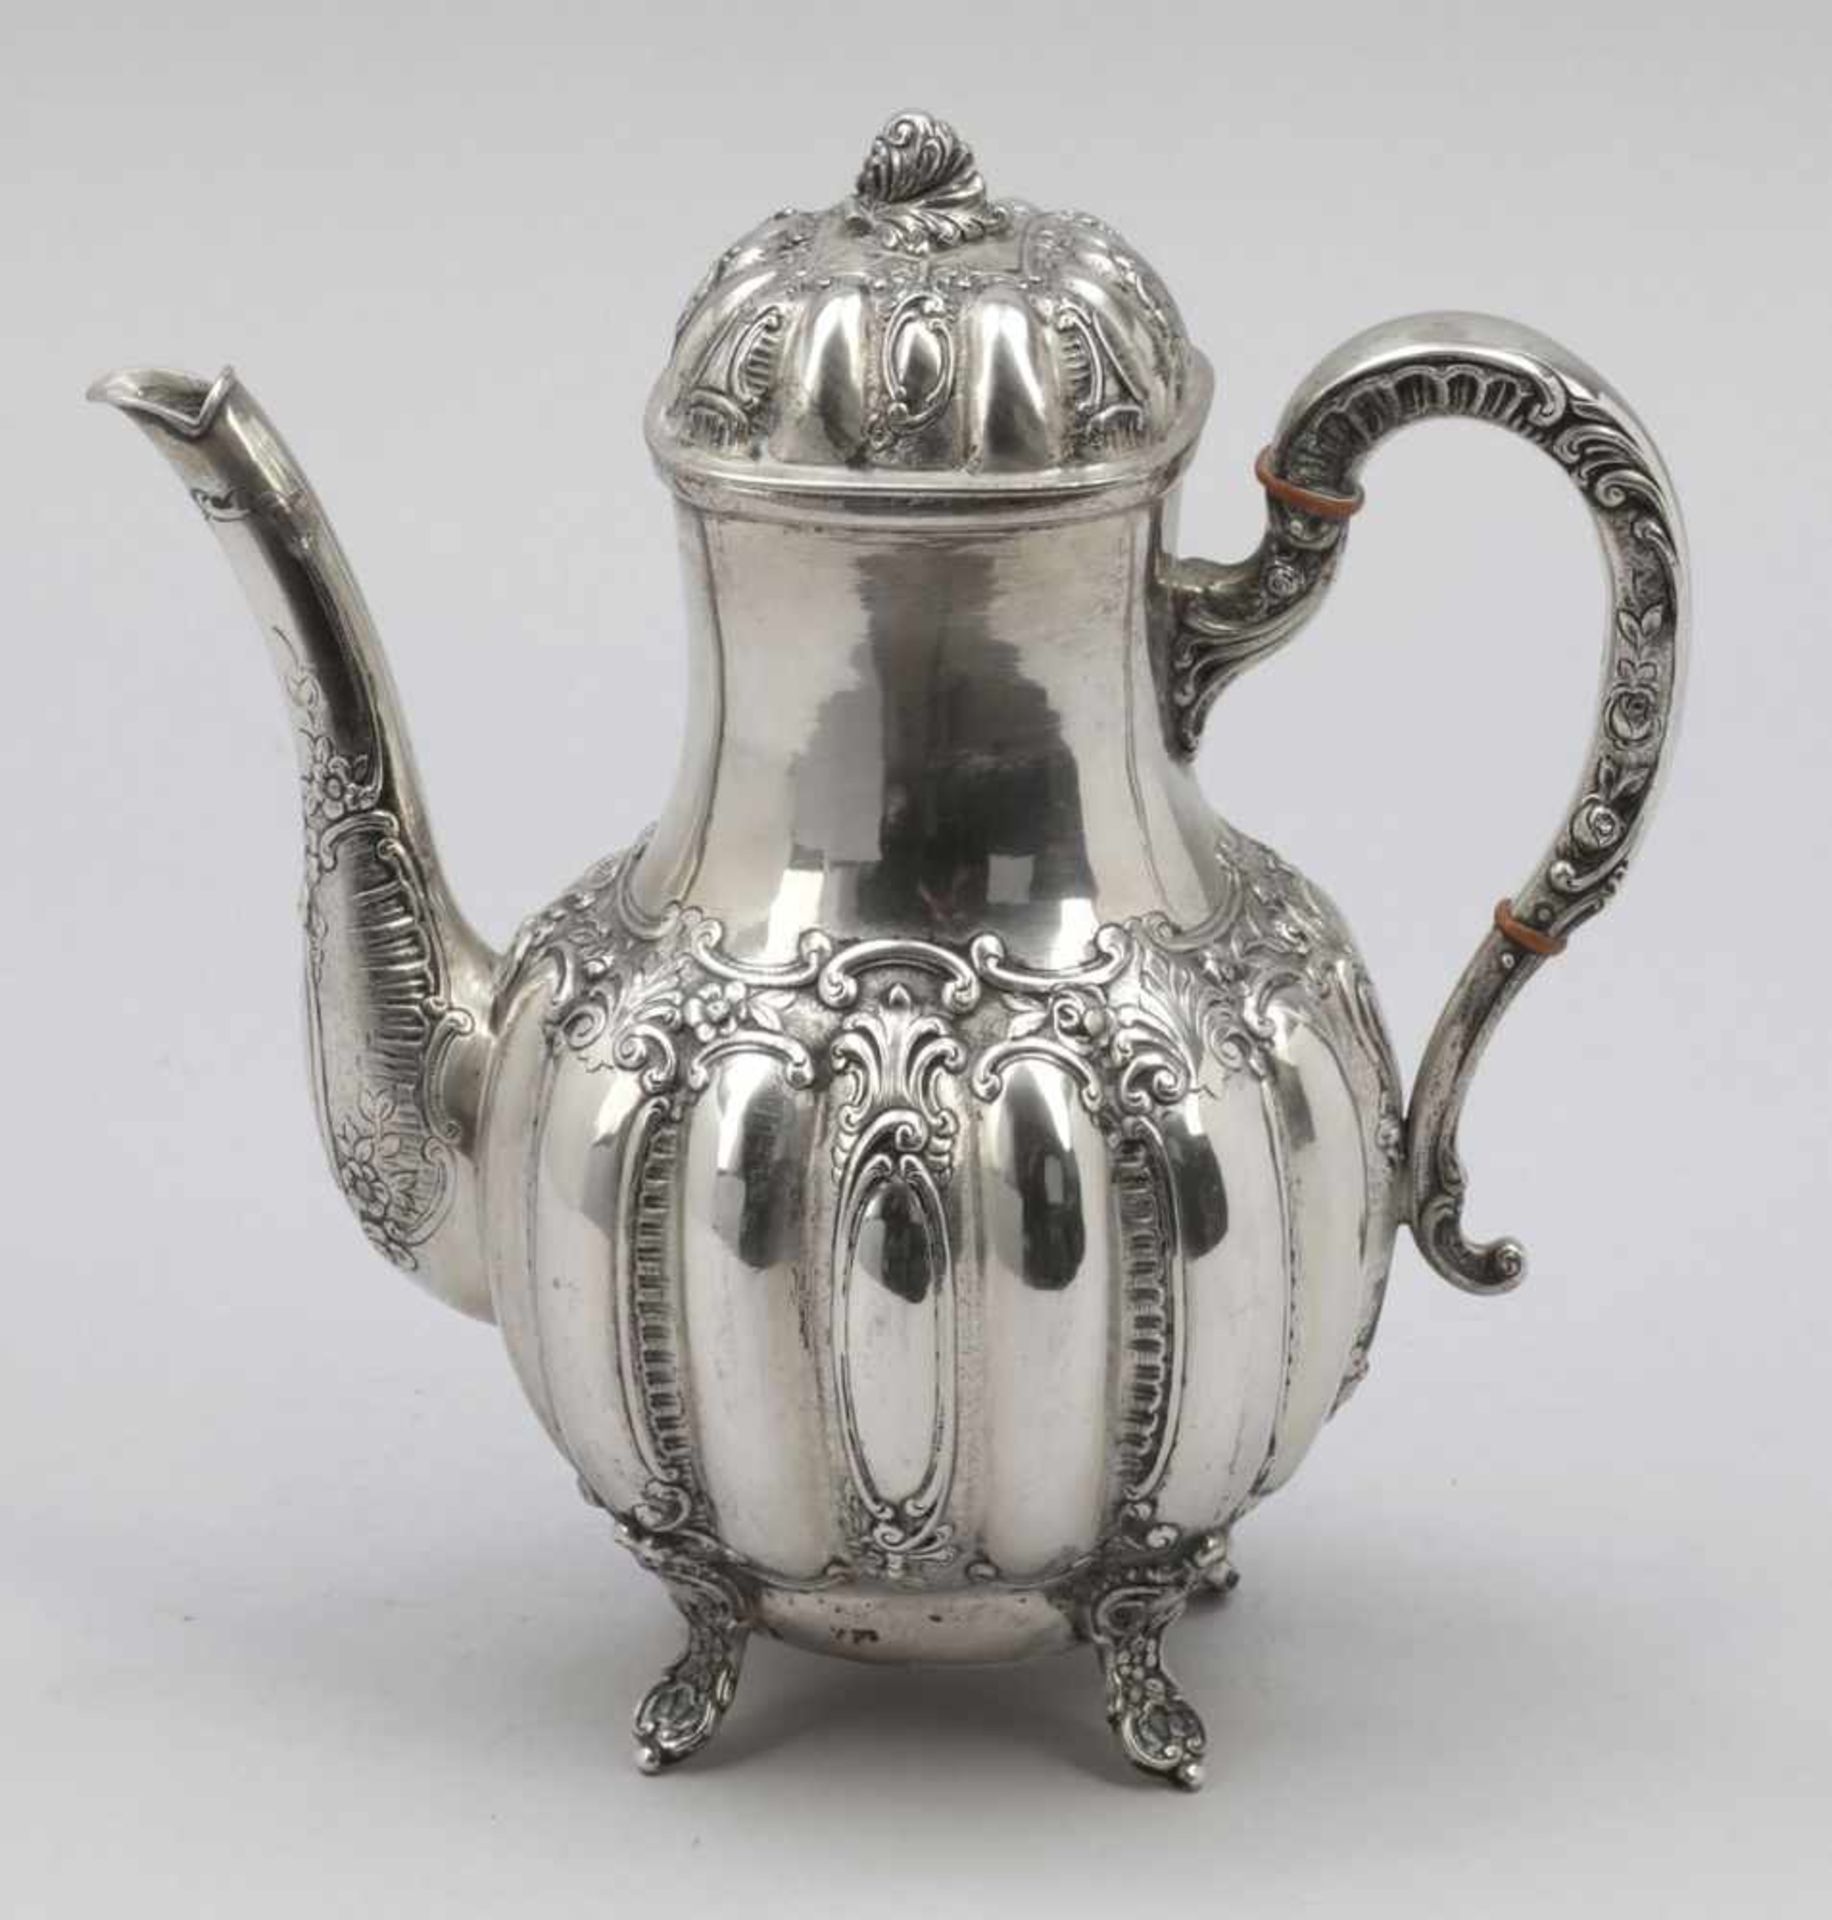 Kaffeekanne / Coffee Pot 800er Silber. Punzen: Herst.-Marke, 800. H. 24 cm. Gew.: 776 g.